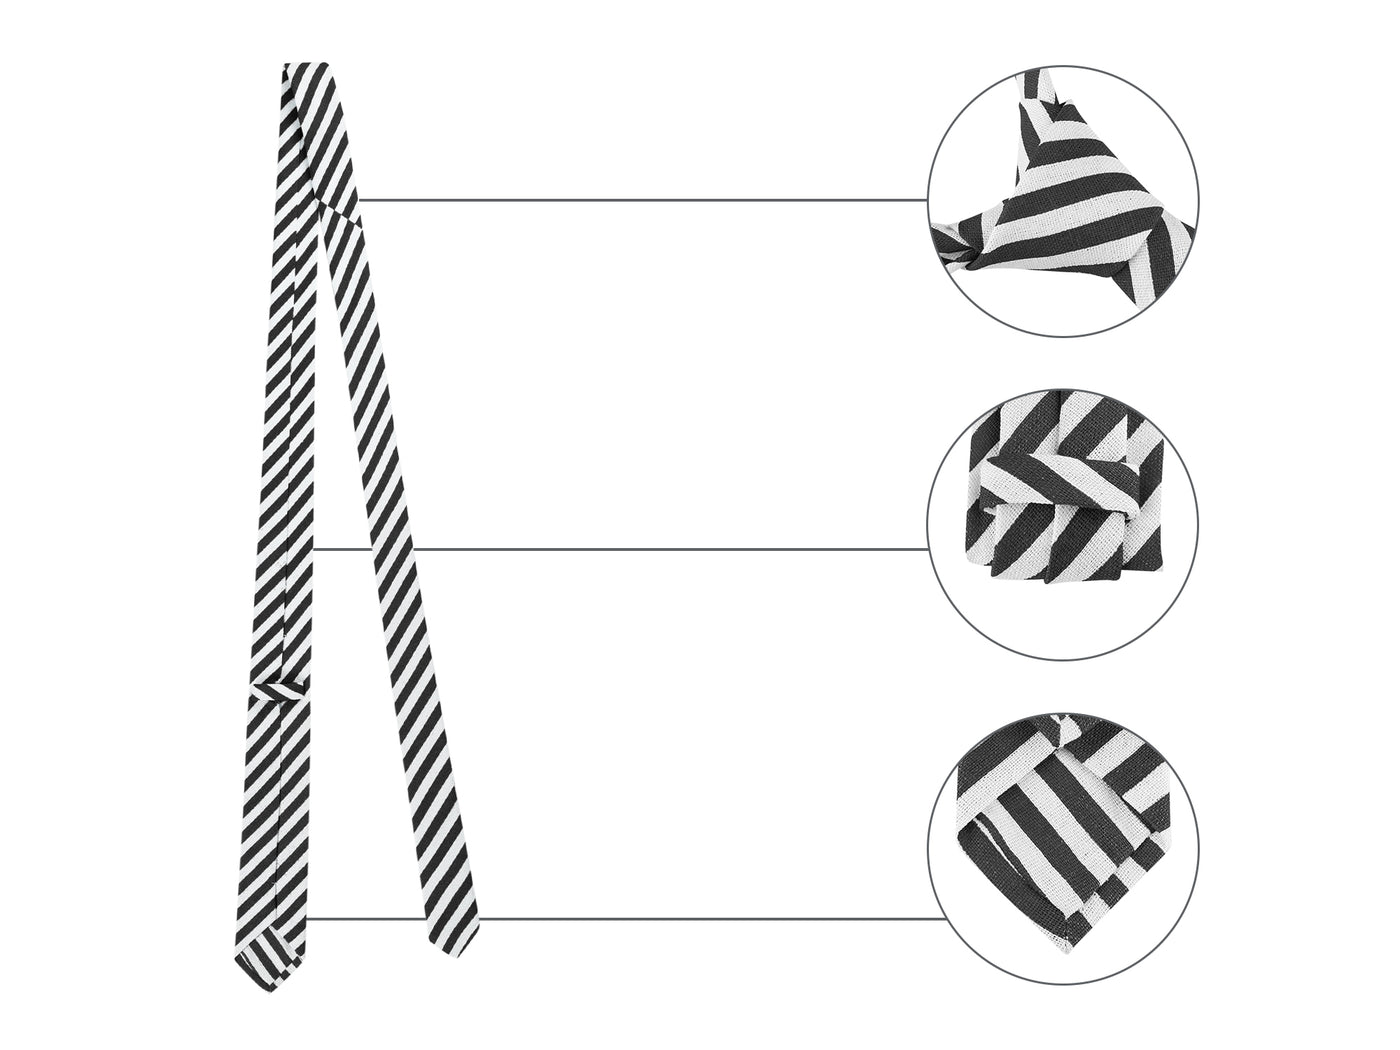 Allegra K Self-Tied Stripes Linen Business Skinny Formal Casual Ties